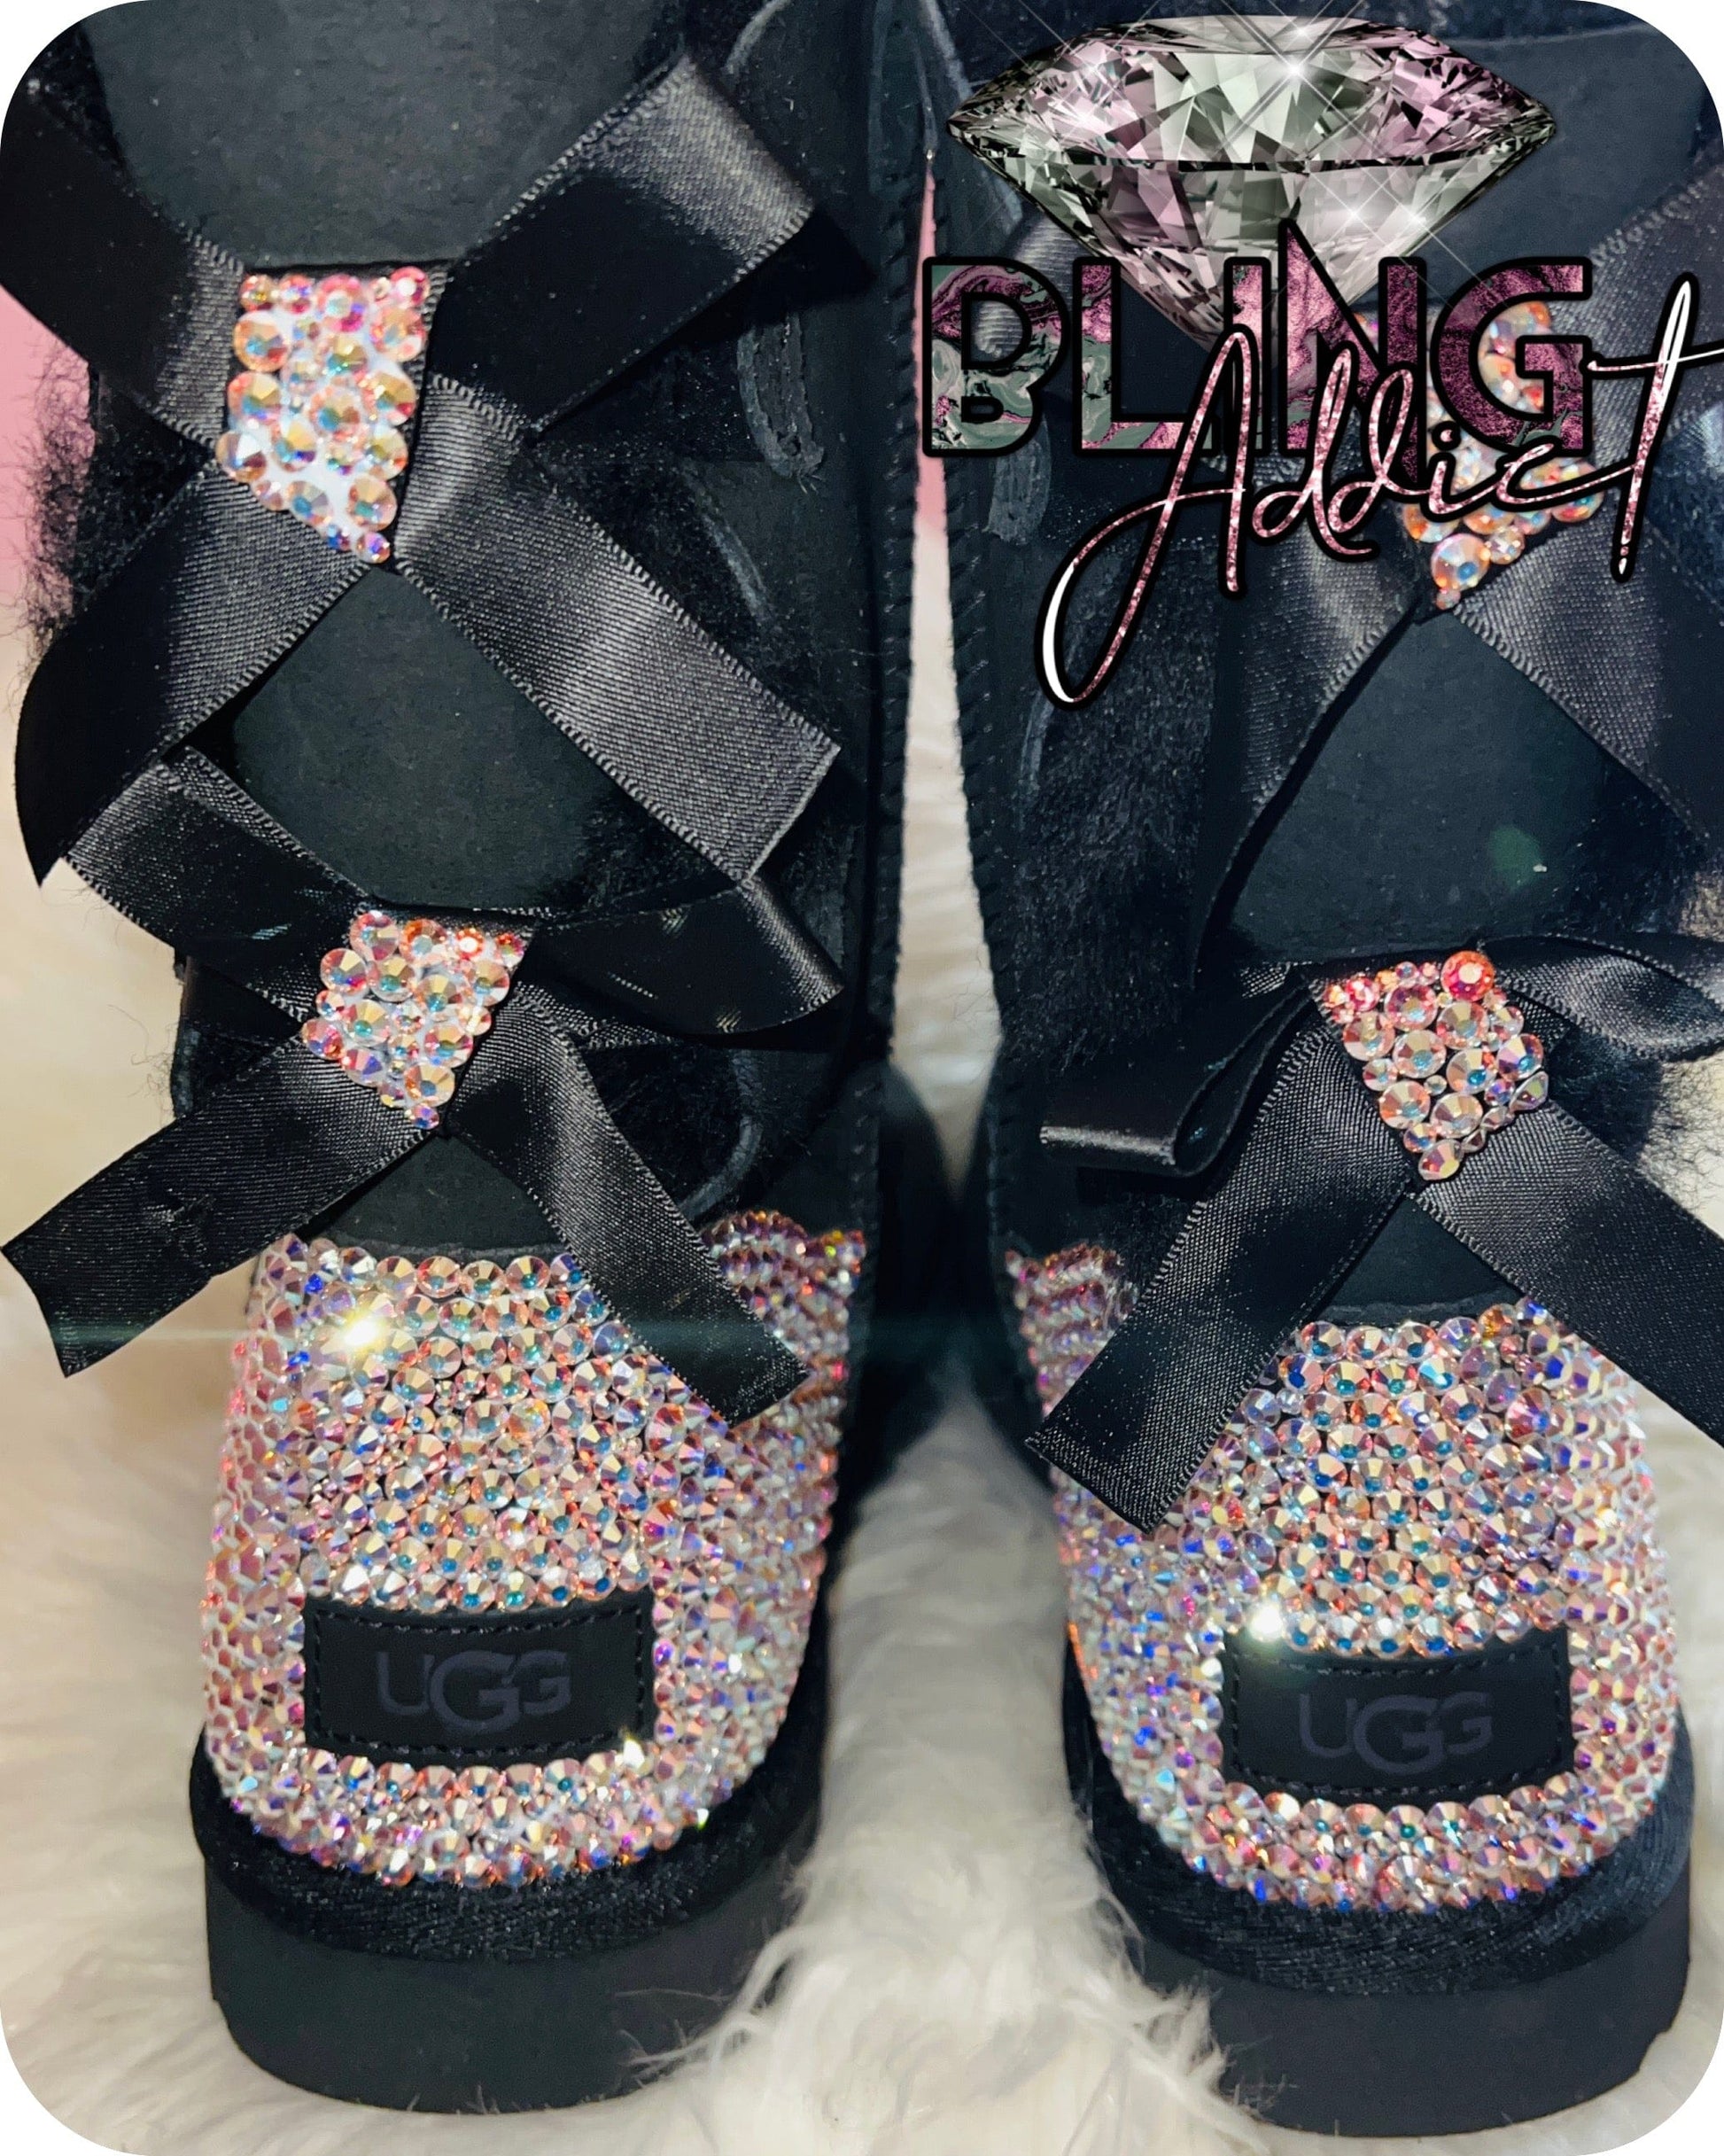 Bling Ugg Crystal Custom Women's Bailey Bow Ugg Boots